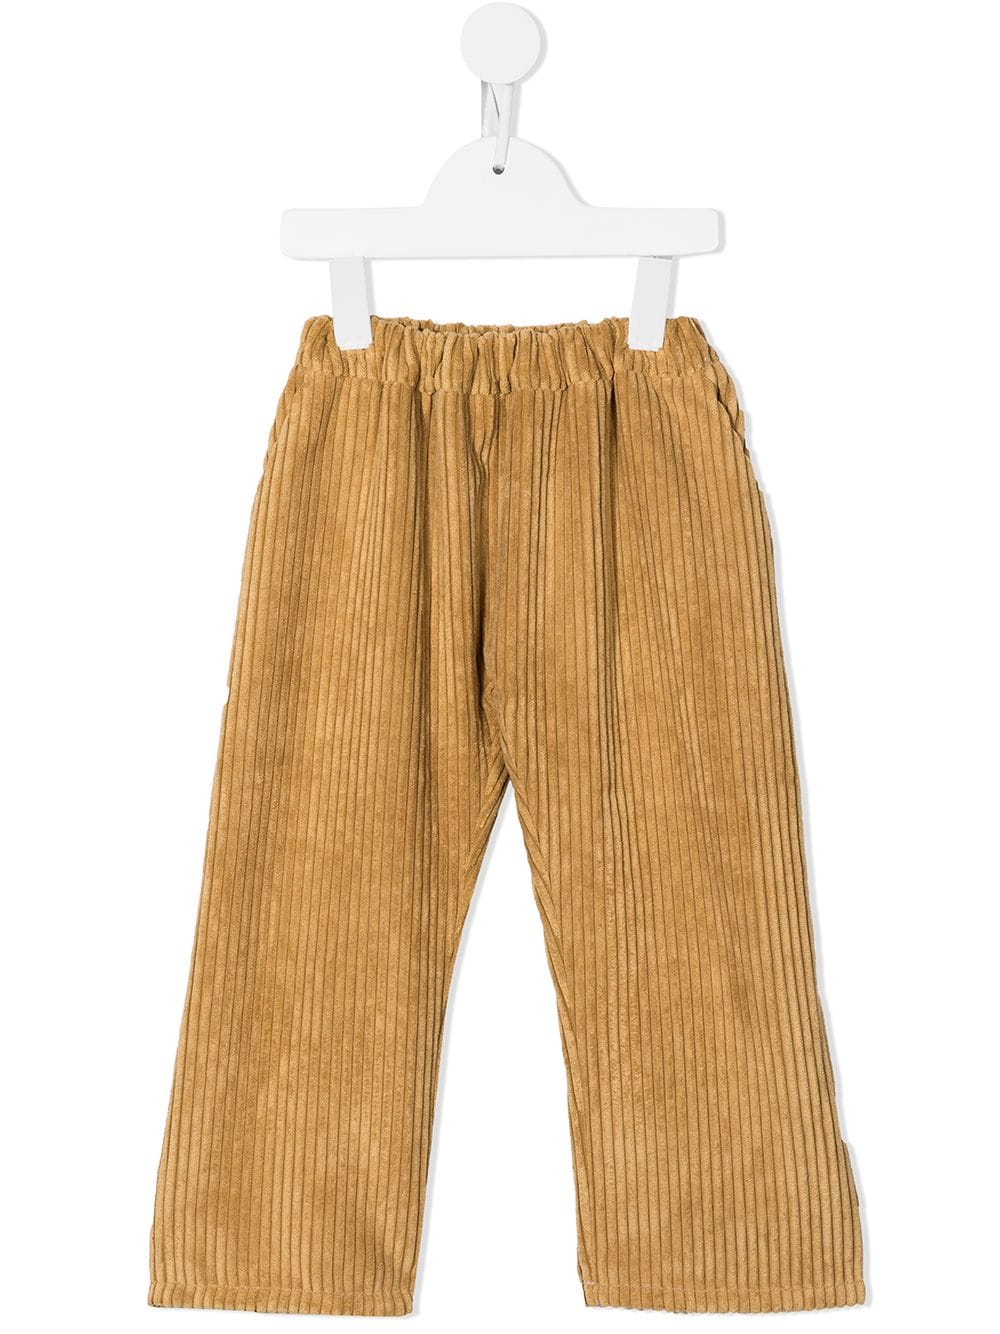 Eshvi Kids elasticated corduroy trousers - Brown von Eshvi Kids